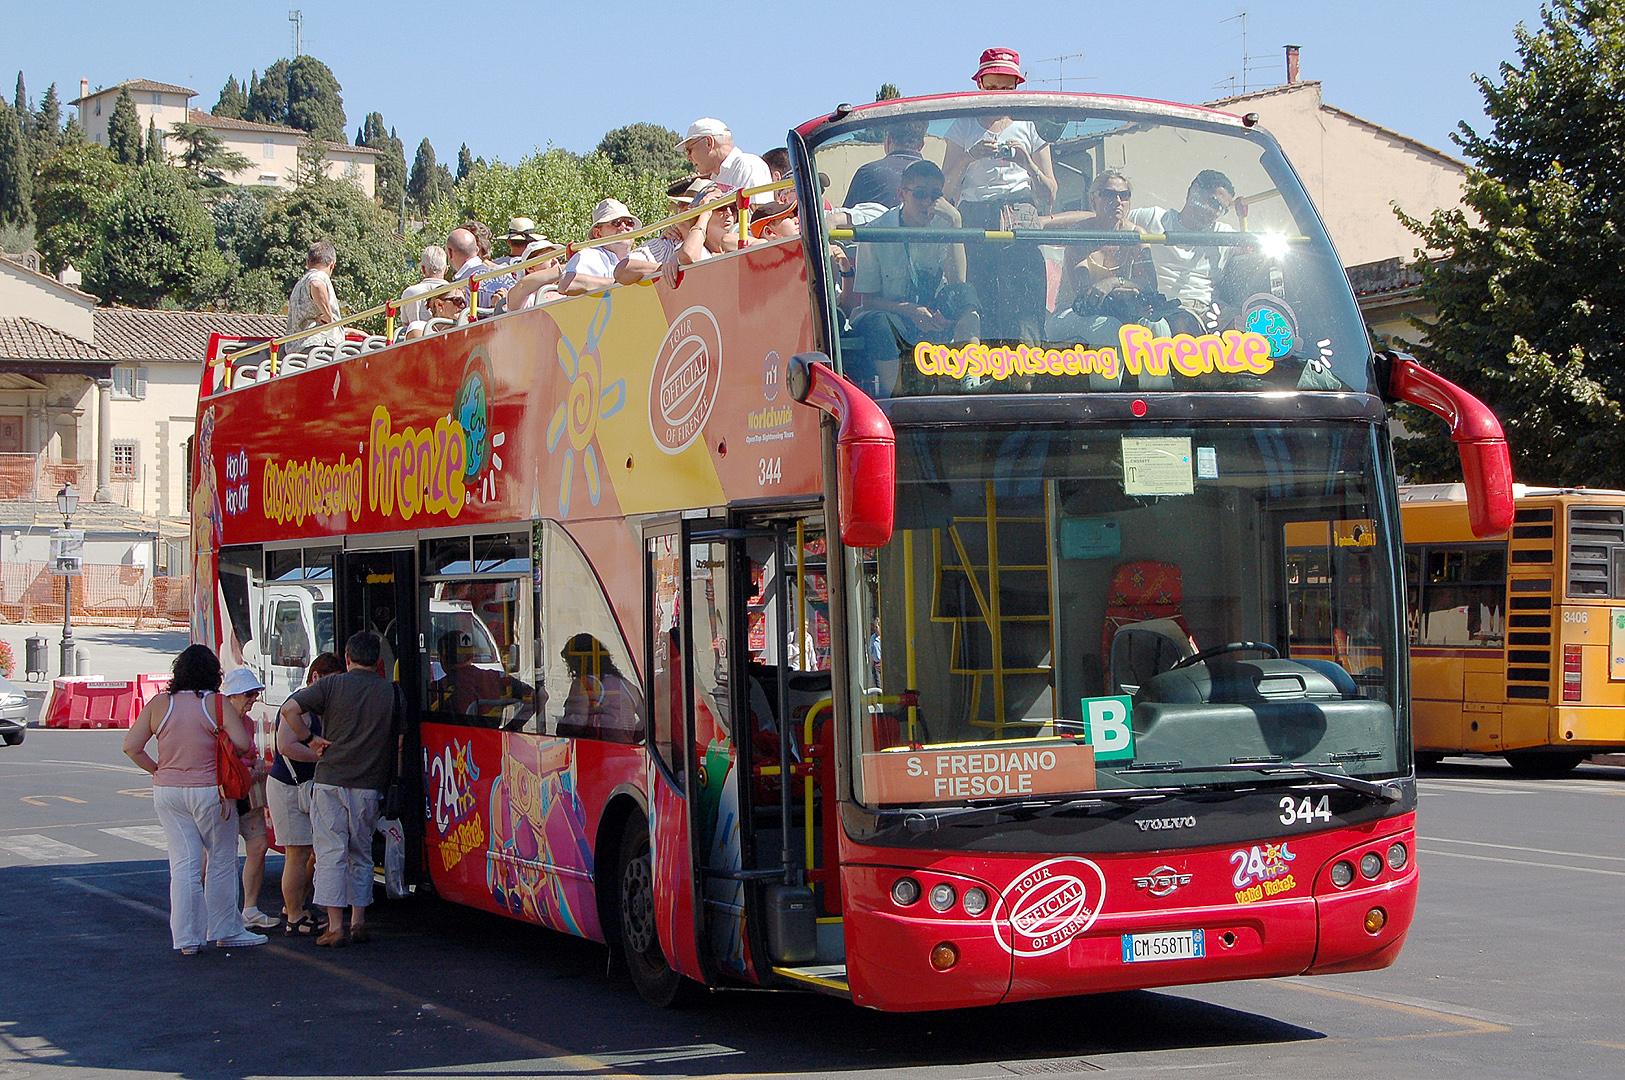 Bus voor stadsrondrit (Fiesole, Itali), Sightseeing bus (Fiesole, Italy)